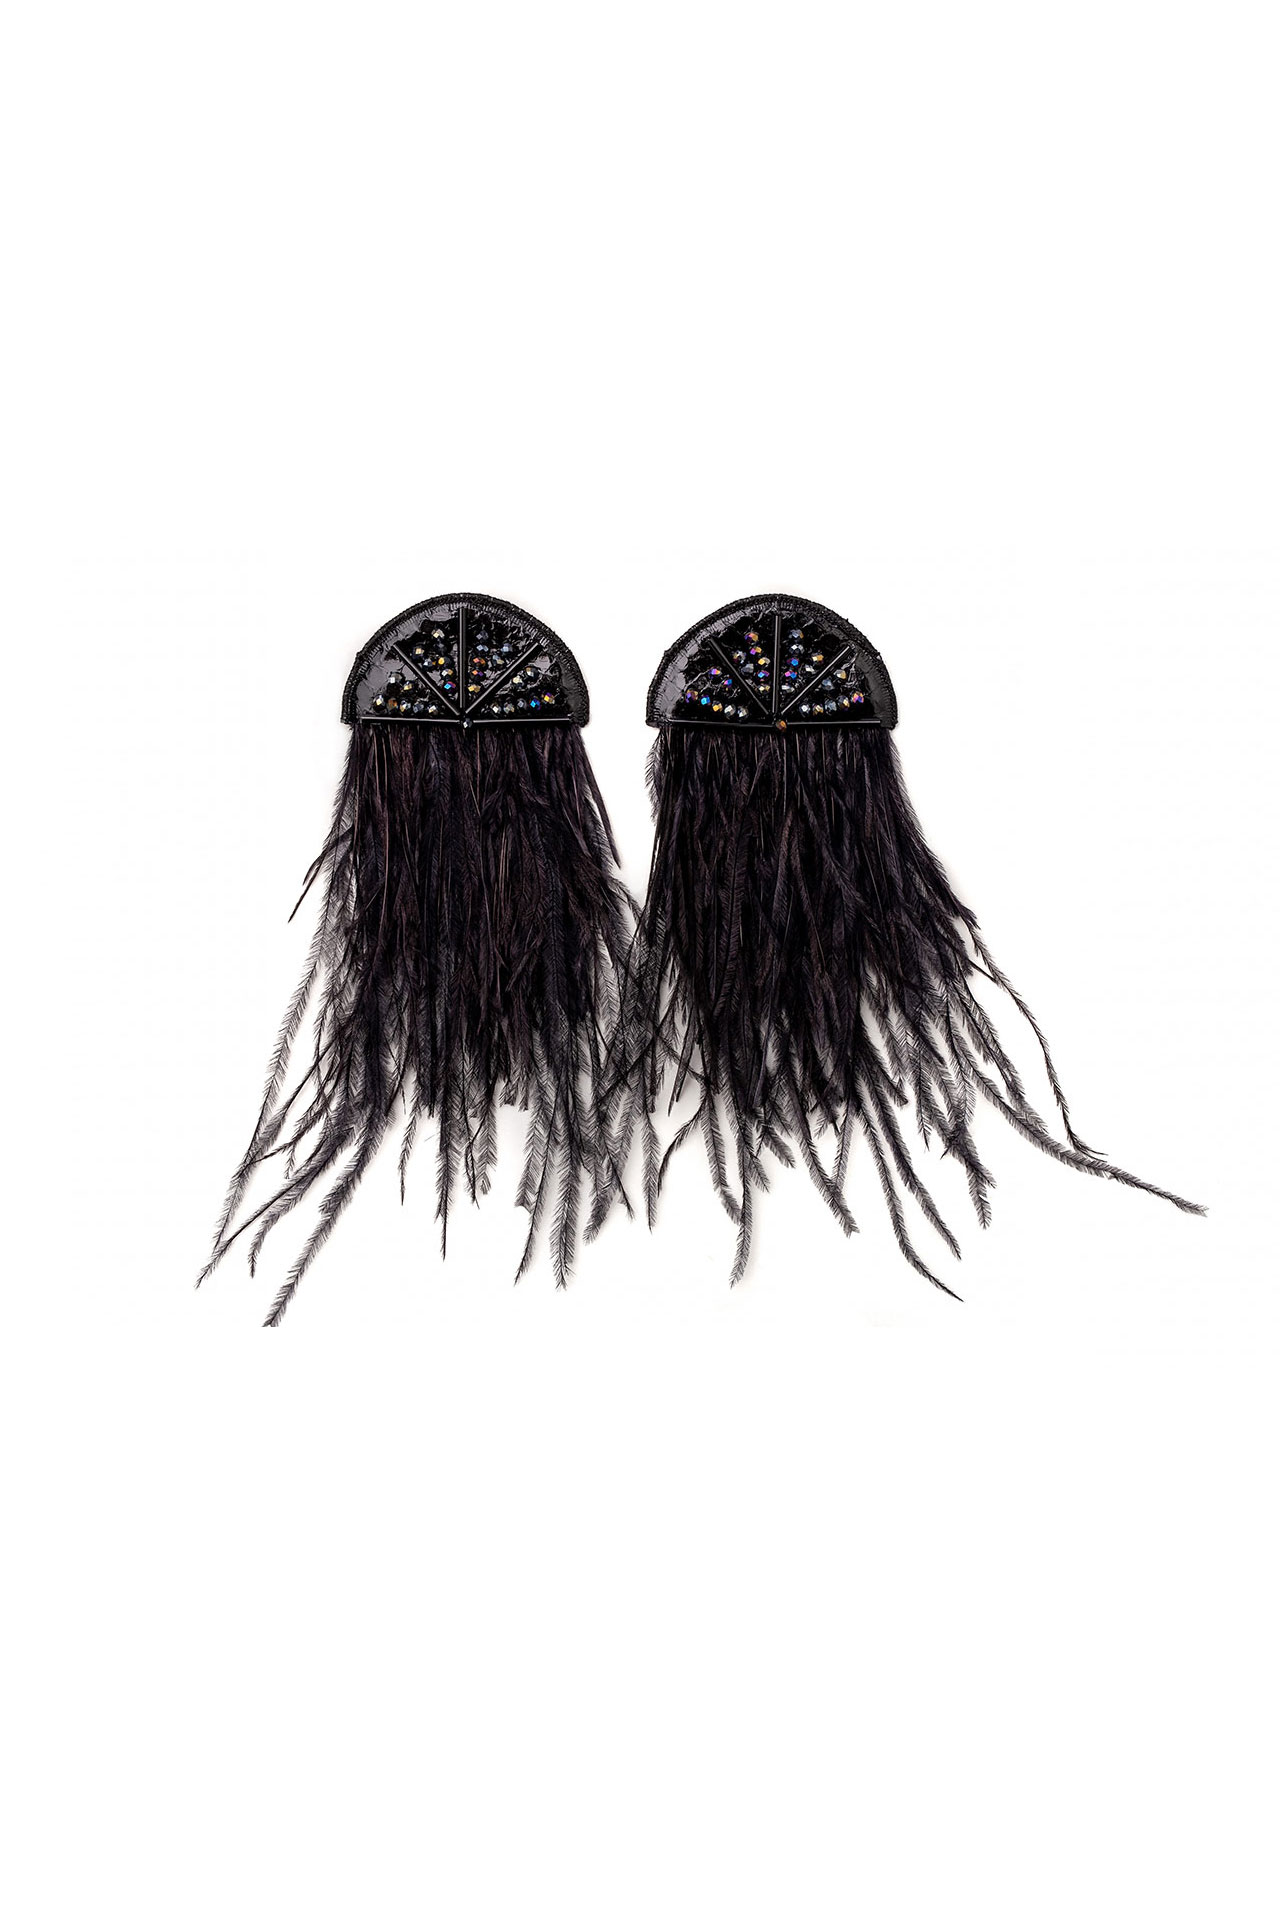 Handmade Earrings | Mysterious Black